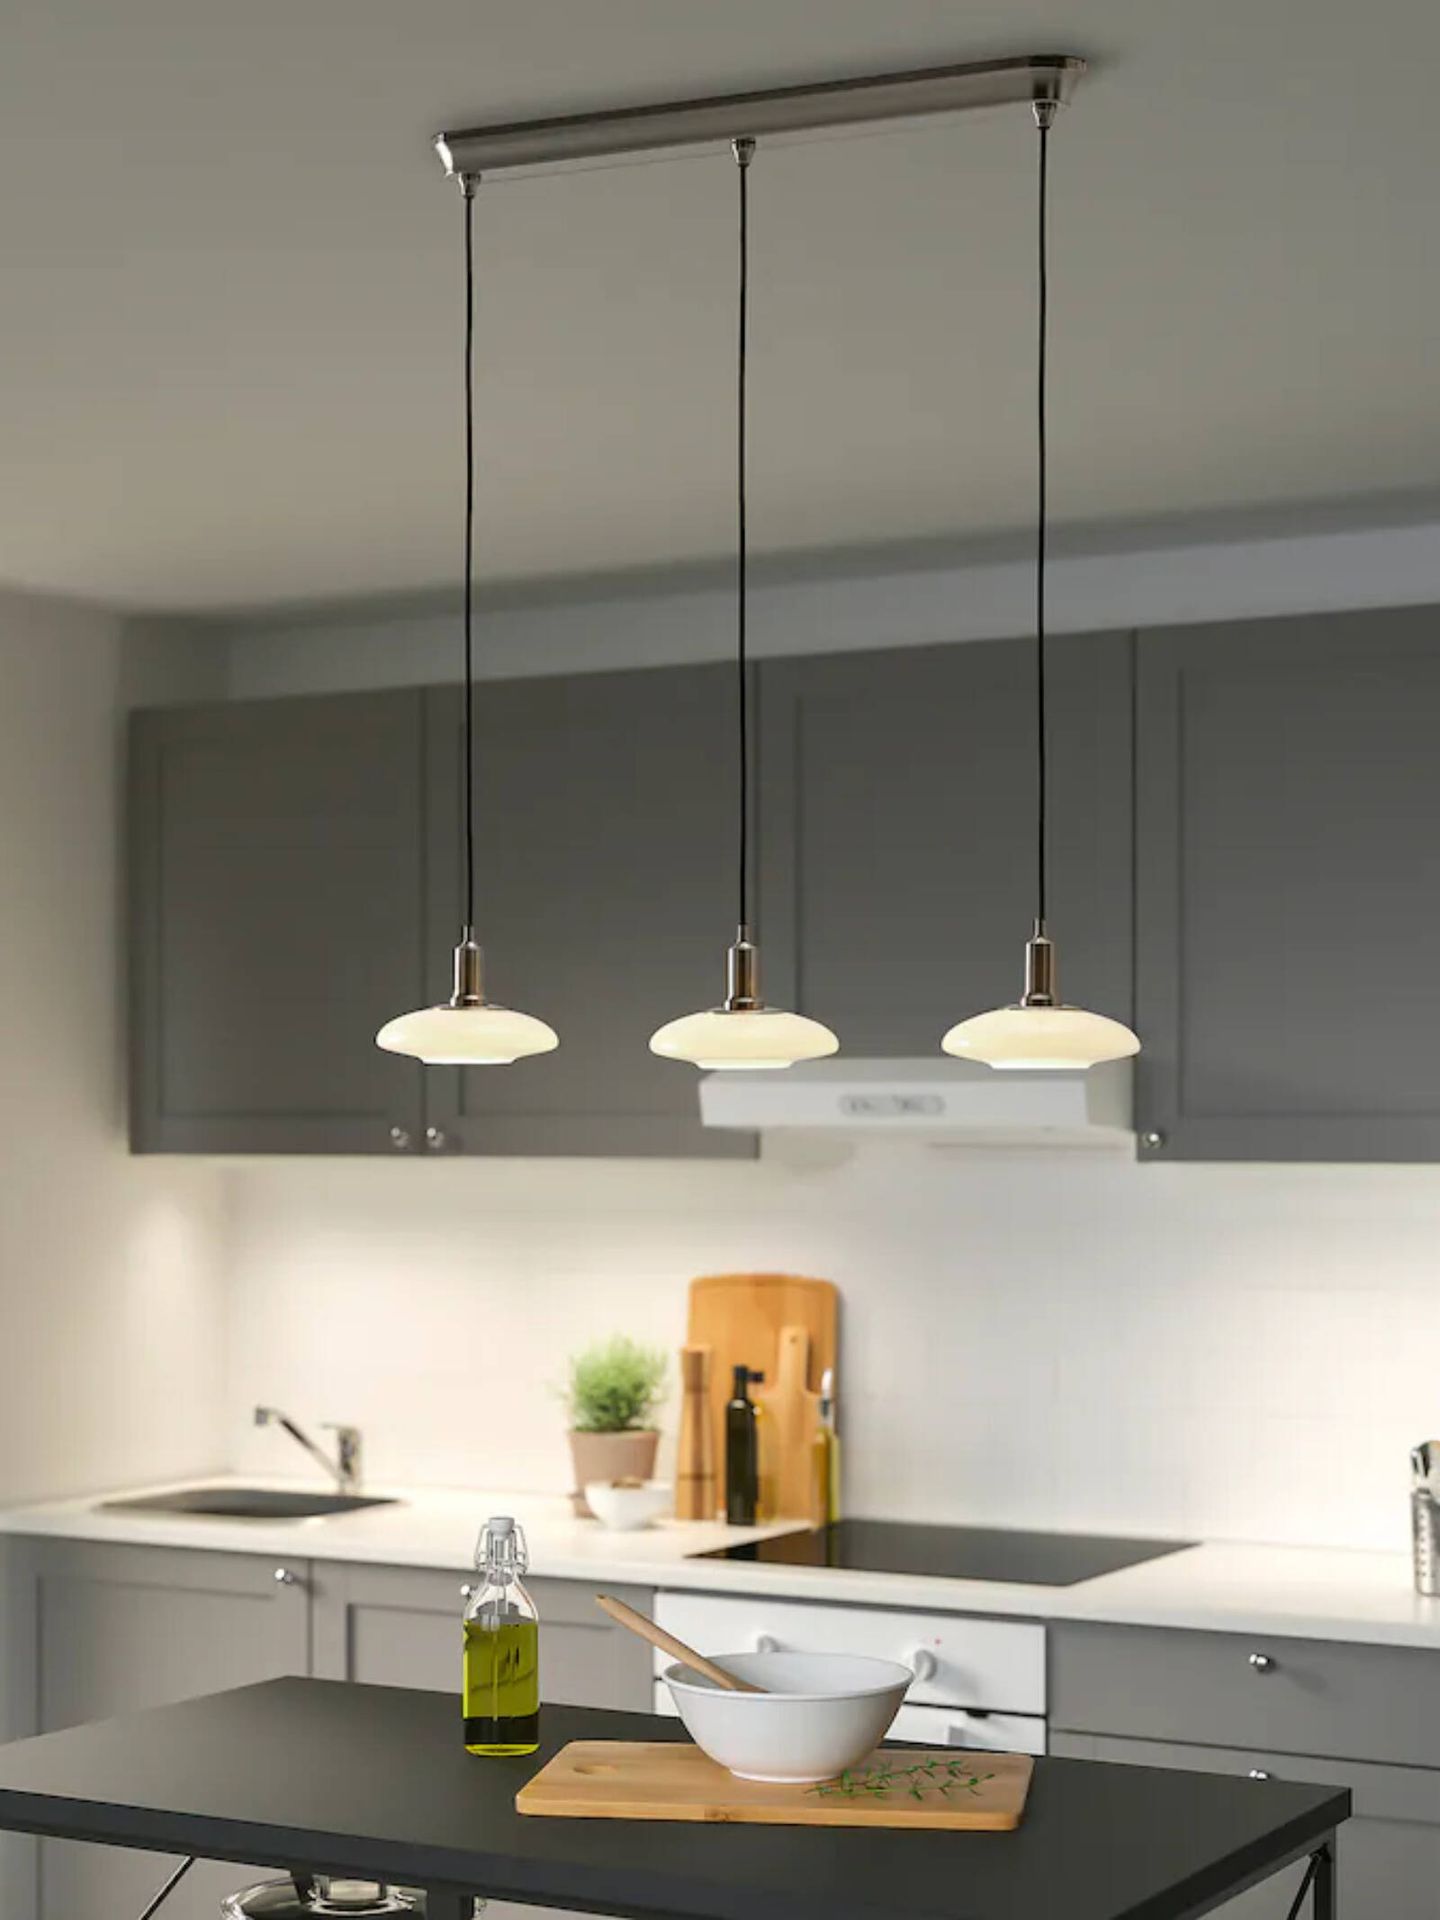 Novedades en lámparas para iluminar tu casa. (Cortesía/Ikea)